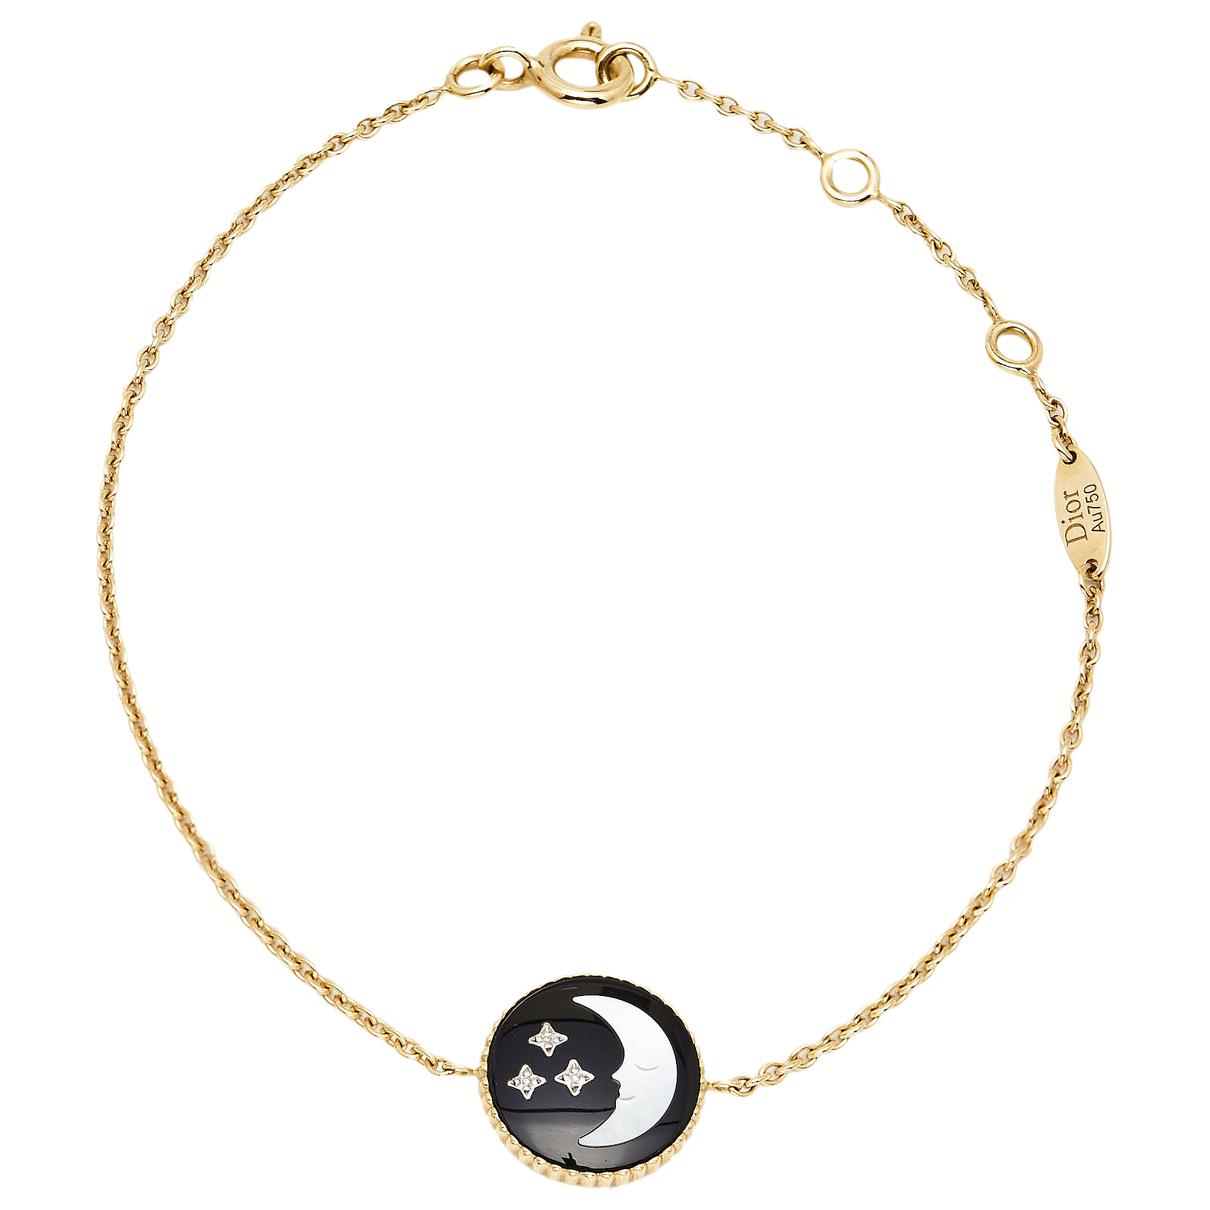 Bracelet Louis Vuitton Gold in Chain - 25276866